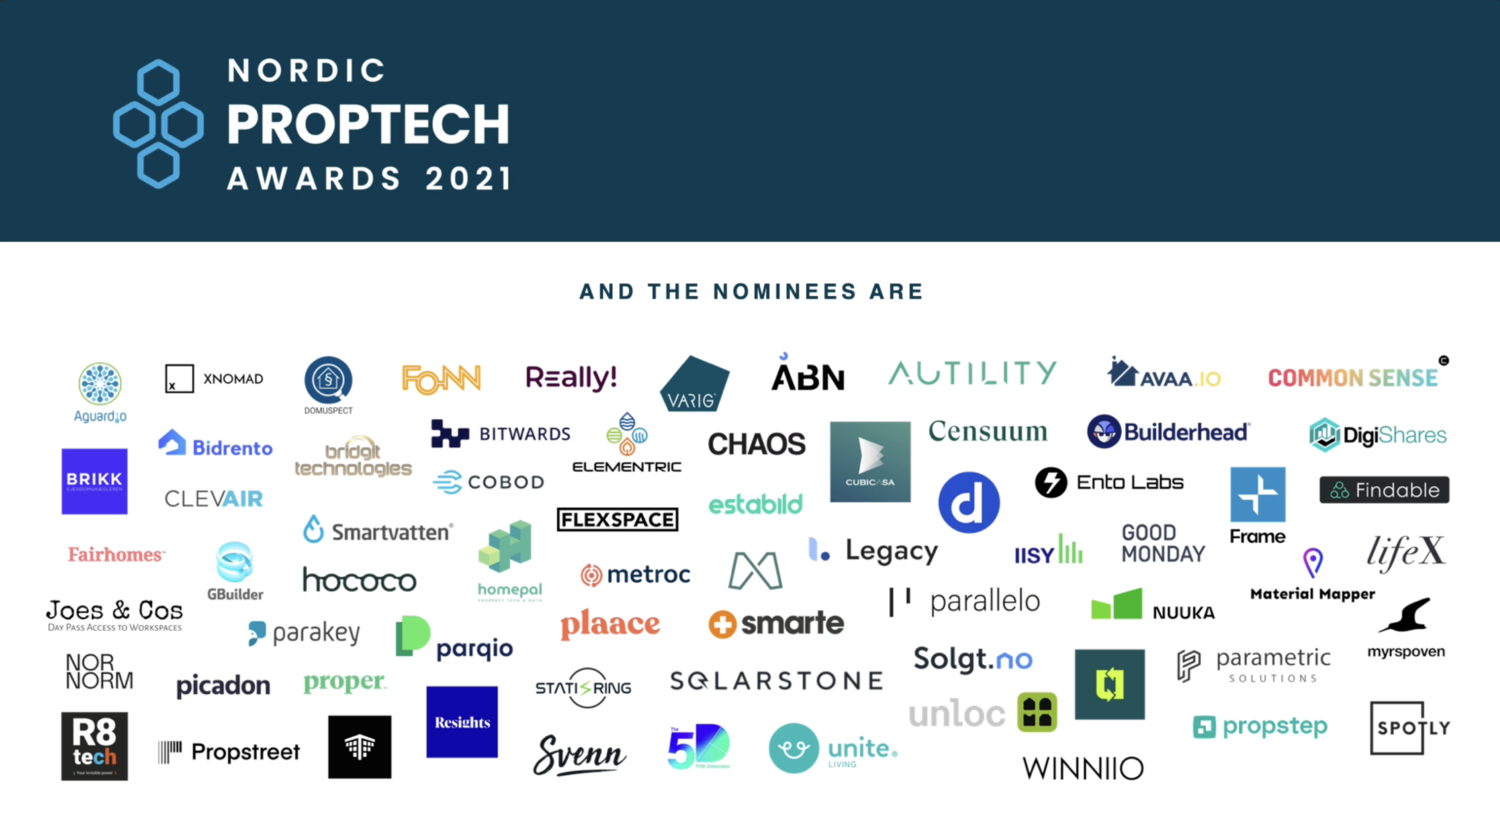 Bridgit Tech har nominerats till Nordic PropTech Awards 2021!